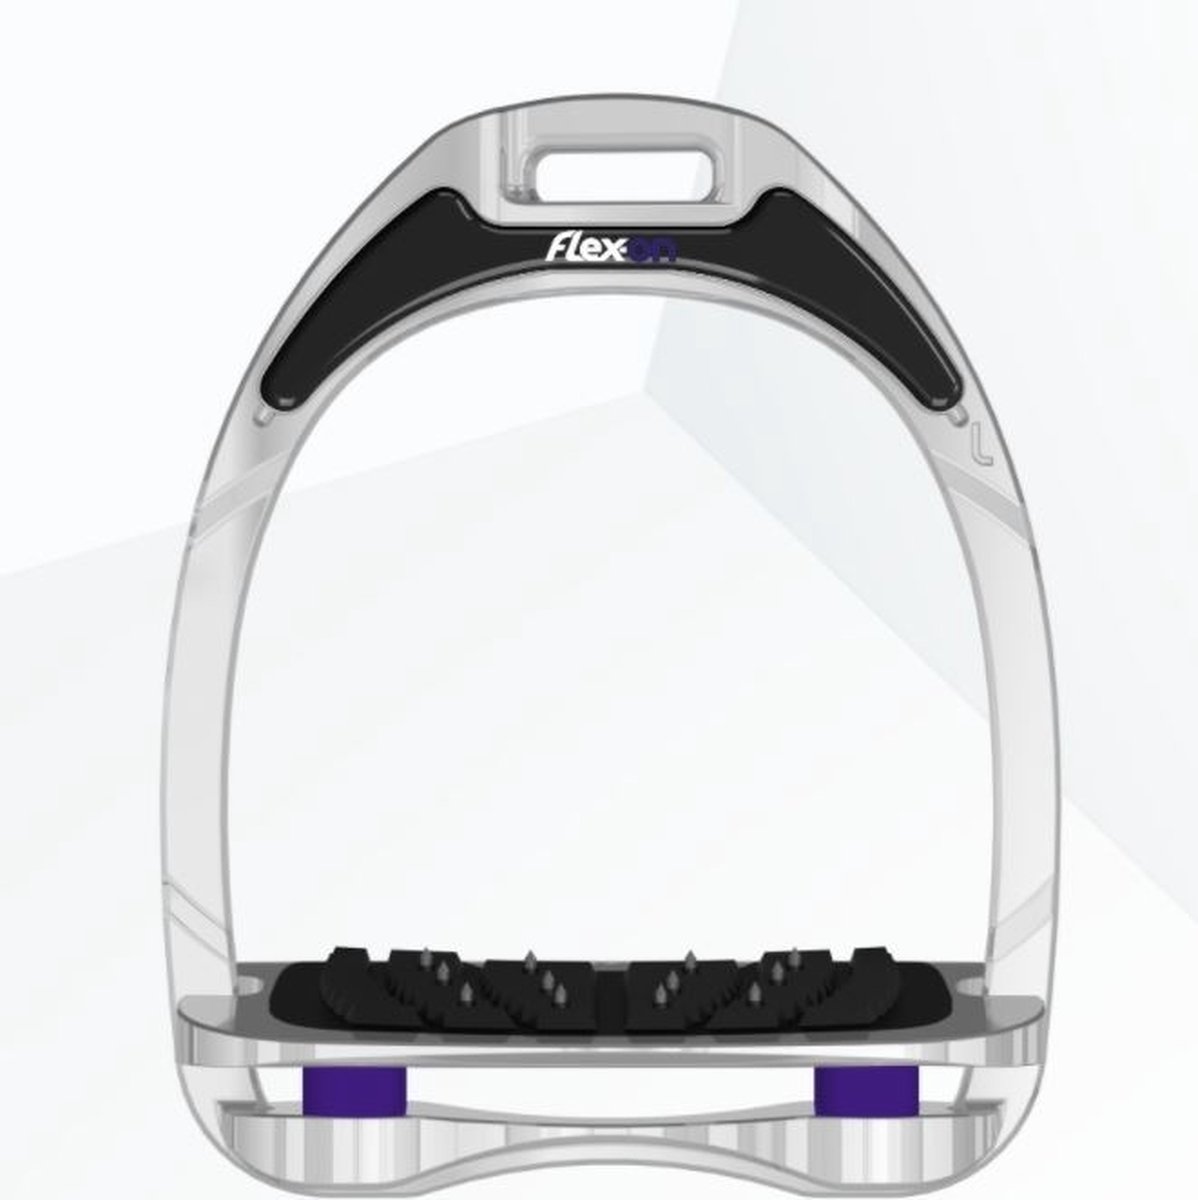 Flex-on Stijgbeugel Aluminum Inclined Ultra Grip - maat One size - silver-purple